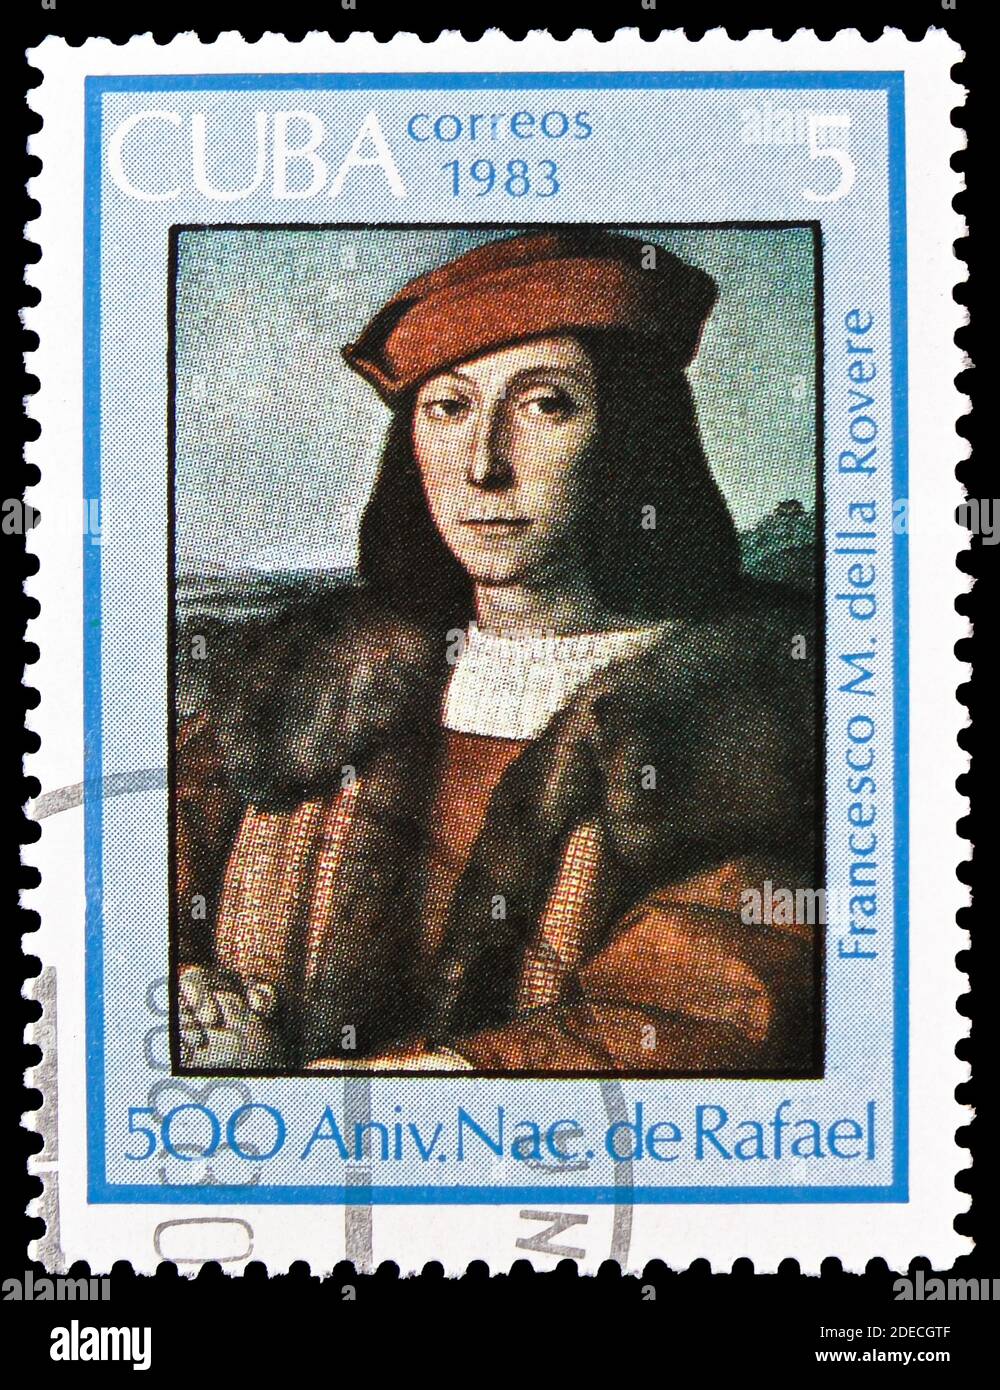 MOSCOW, RUSSIA - OCTOBER 17, 2020: Postage stamp printed in Cuba shows 'Francesco Maria I della Rovere', 1504-1505, Raffael, 500th Birthday serie, cir Stock Photo